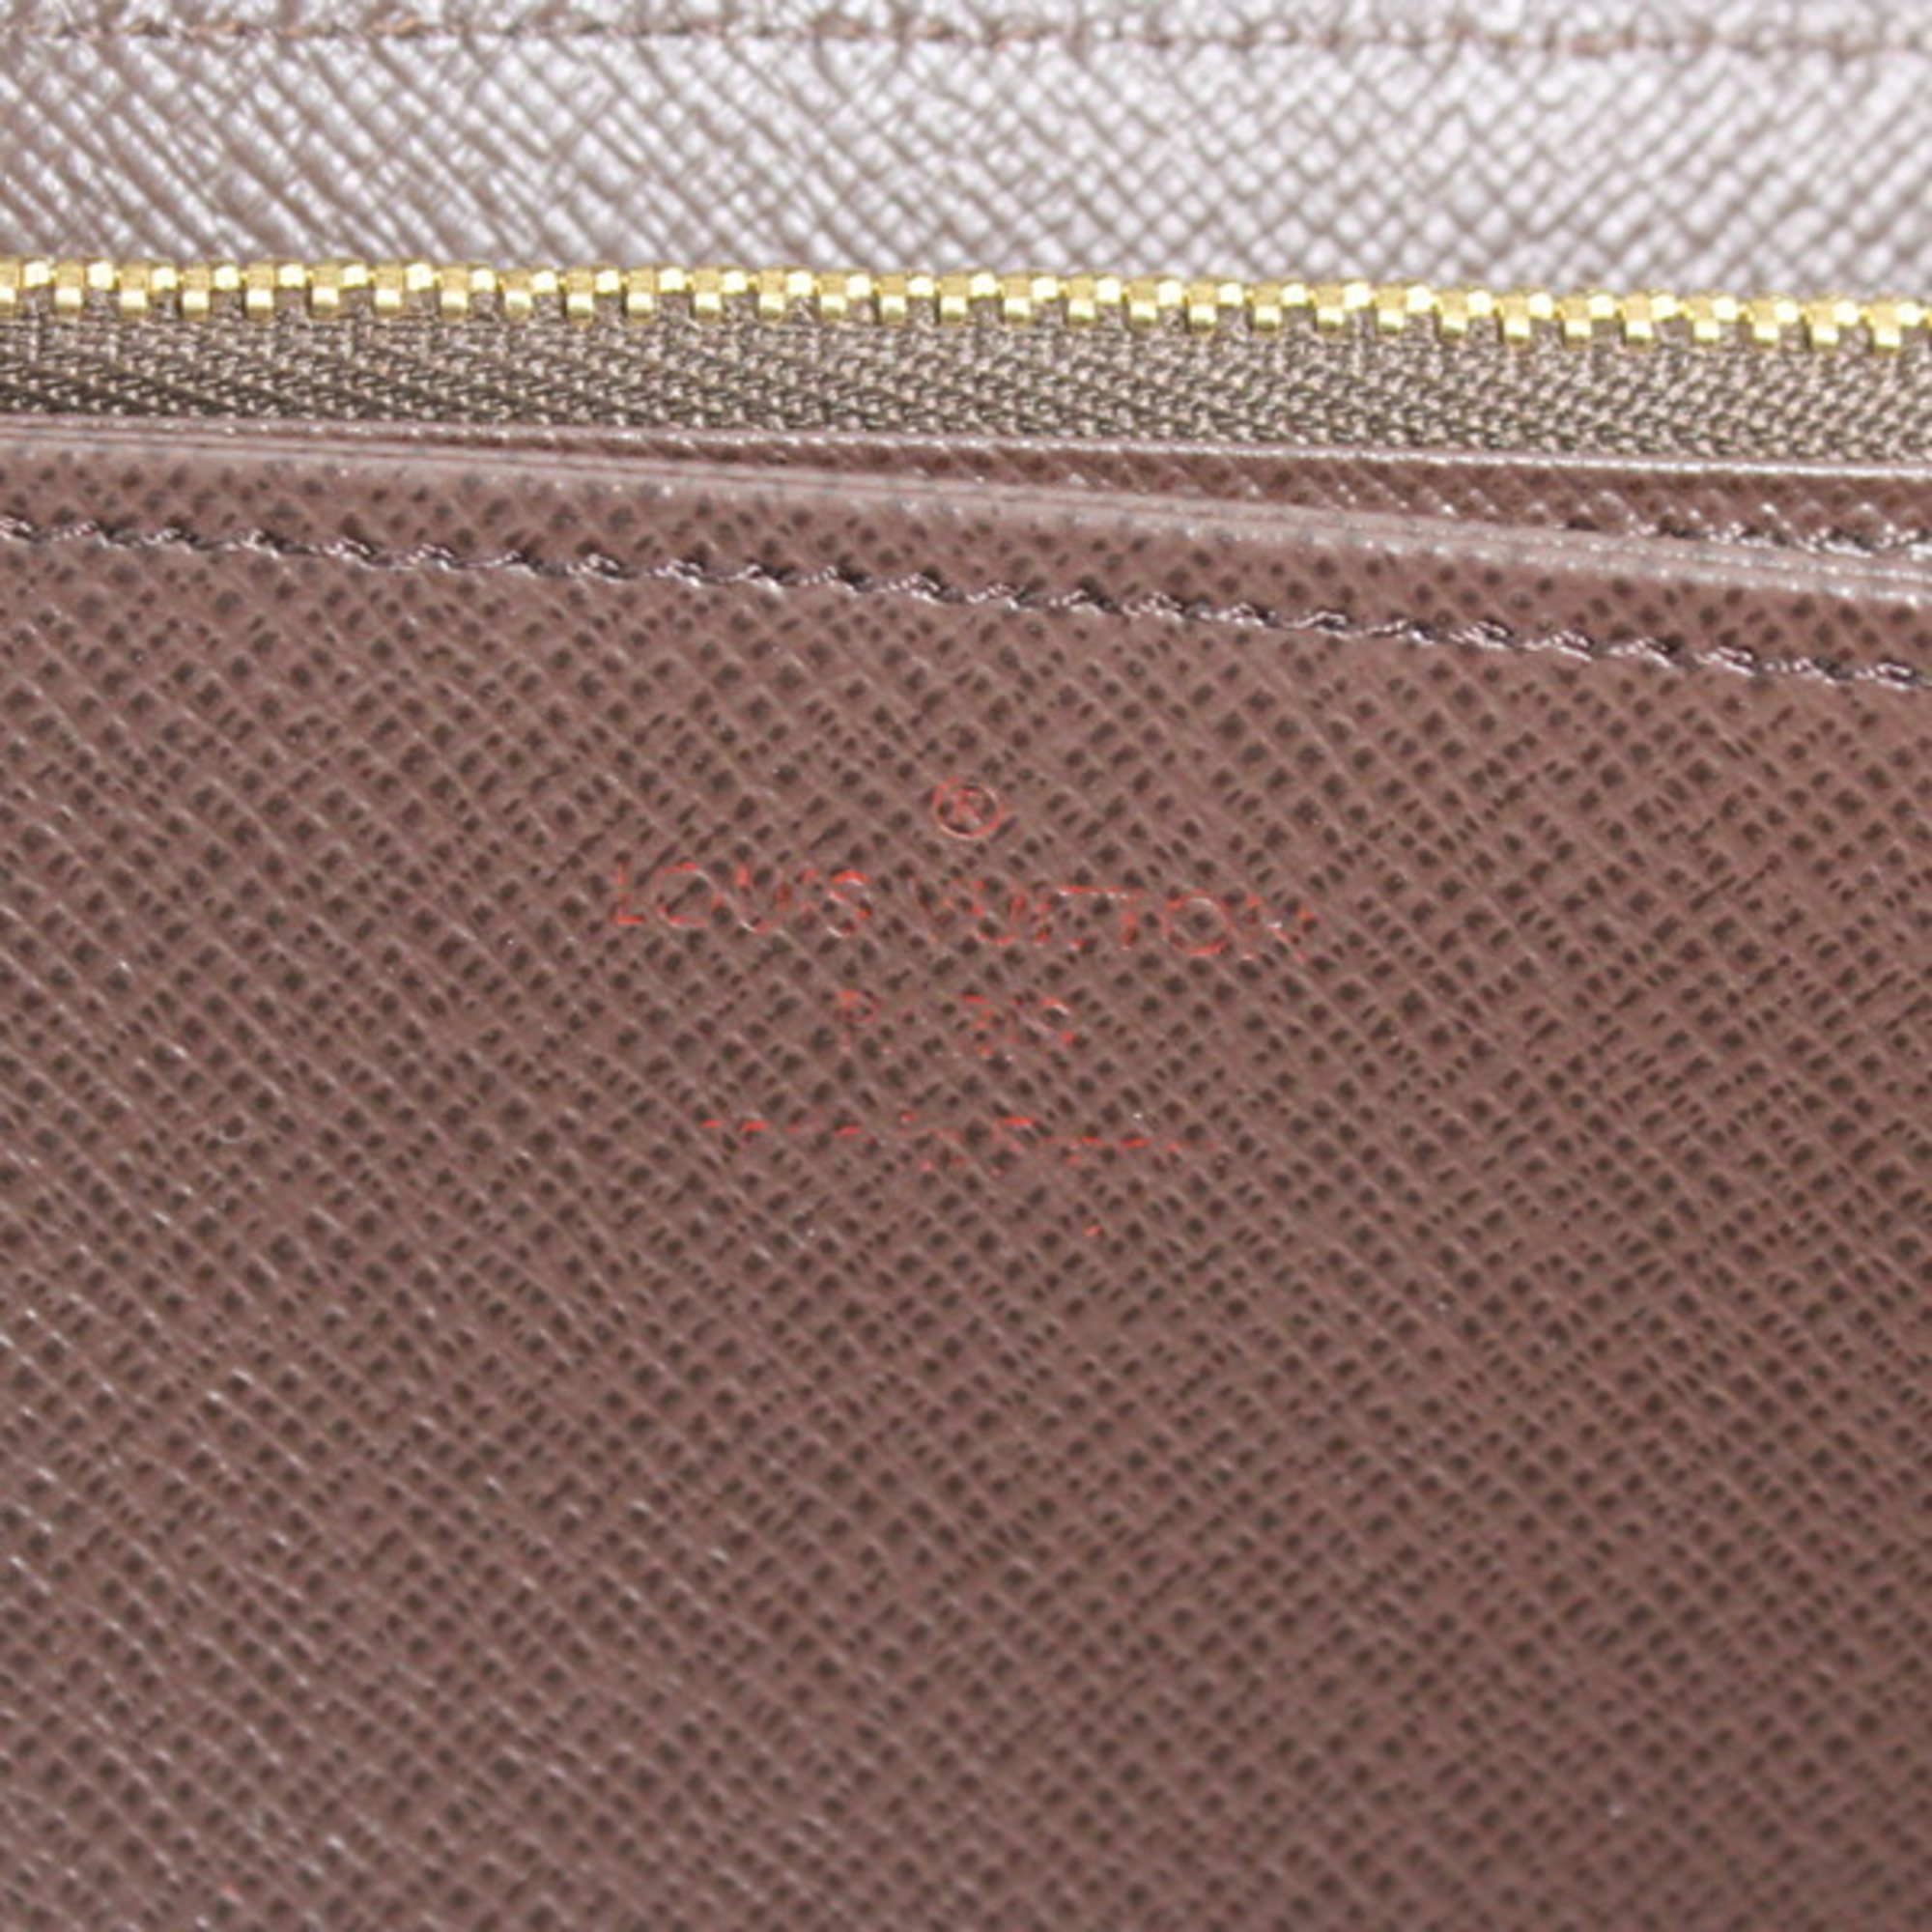 Louis Vuitton Long Wallet Zippy Women's Men's Damier Brown N41661 LOUIS VUITTON Round Zip